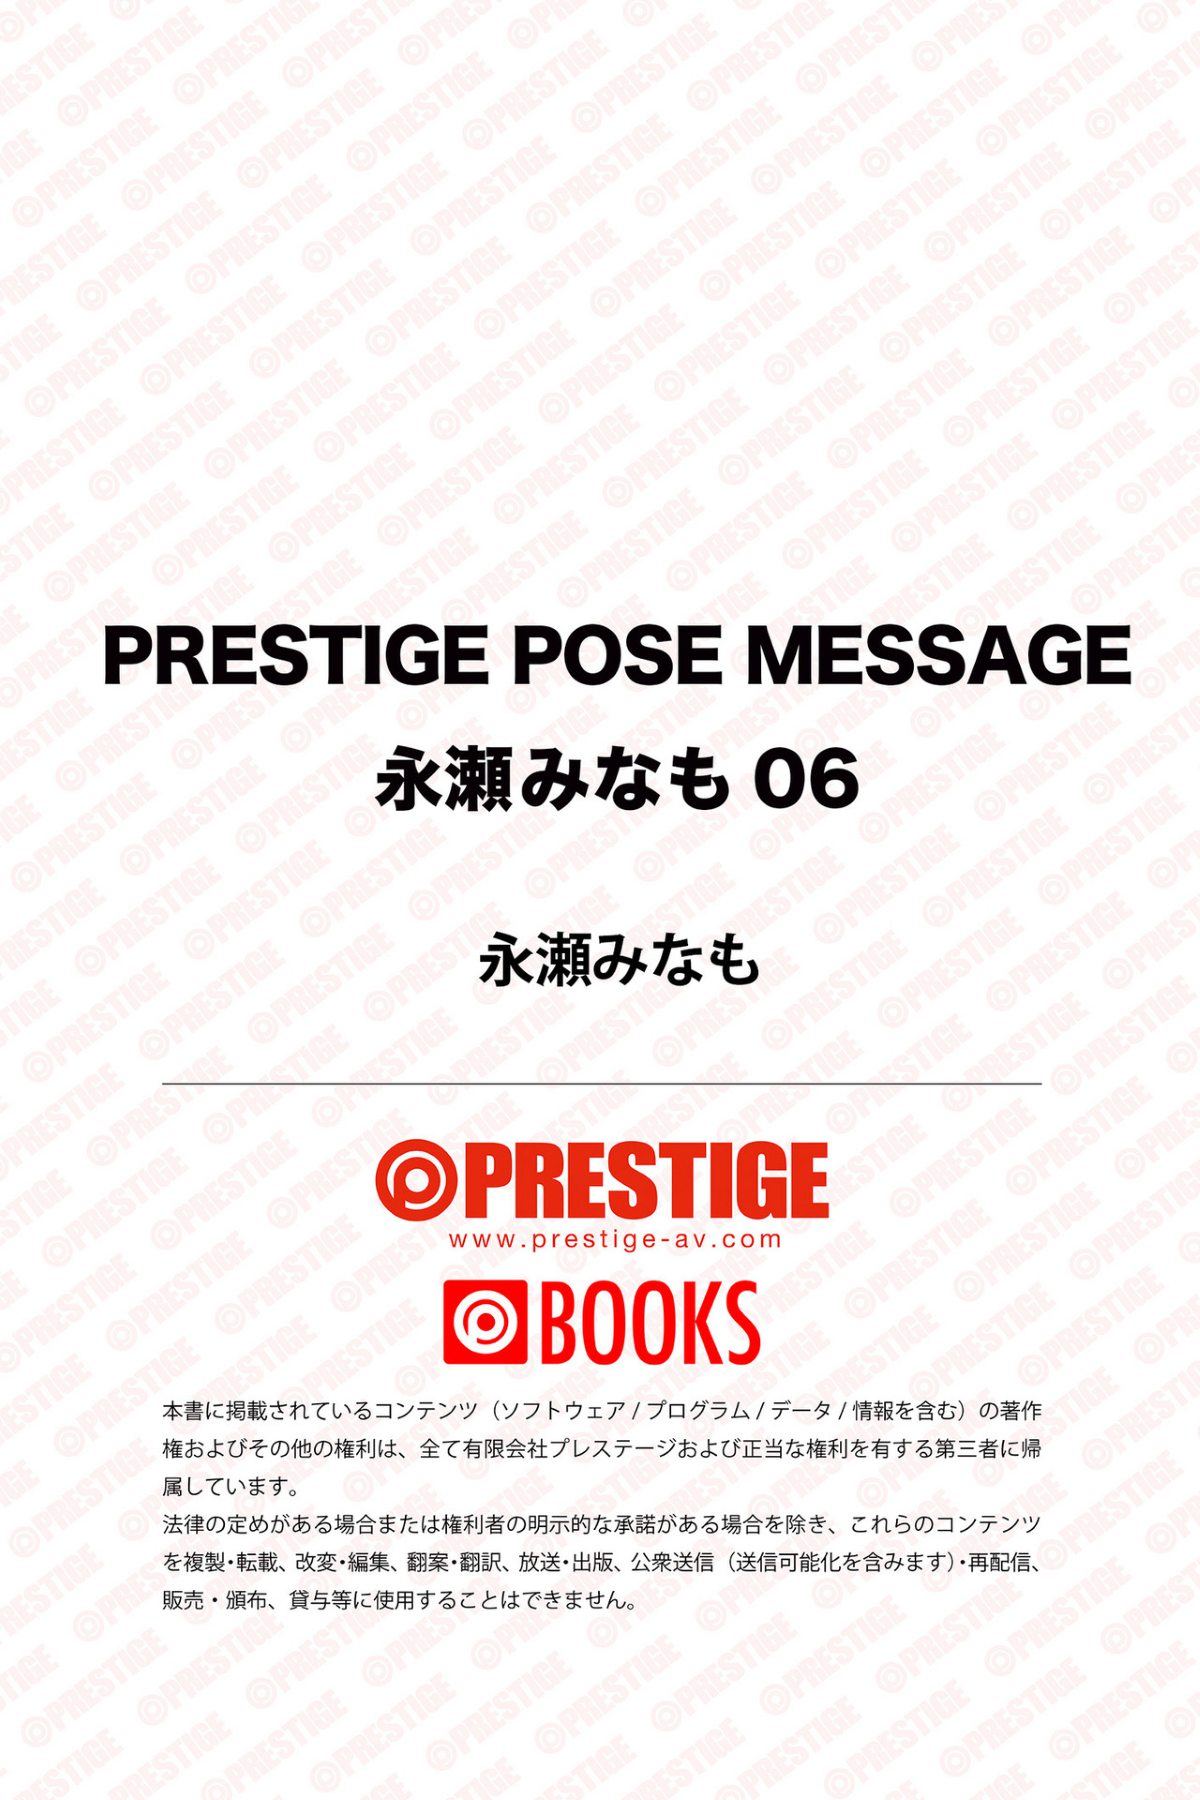 Photobook Minamo Nagase 永瀬みなも PRESTIGE POSE MESSAGE 06 2021 11 05 0058 4815098192.jpg